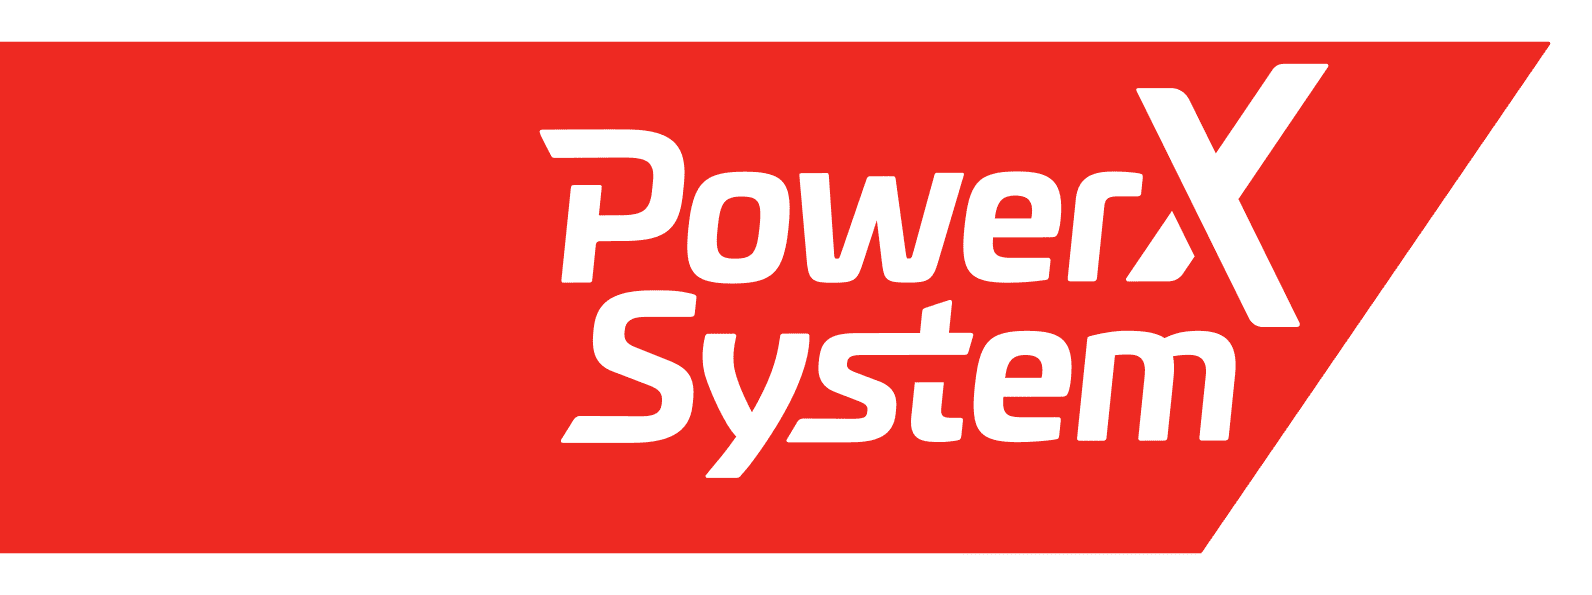 Power X System